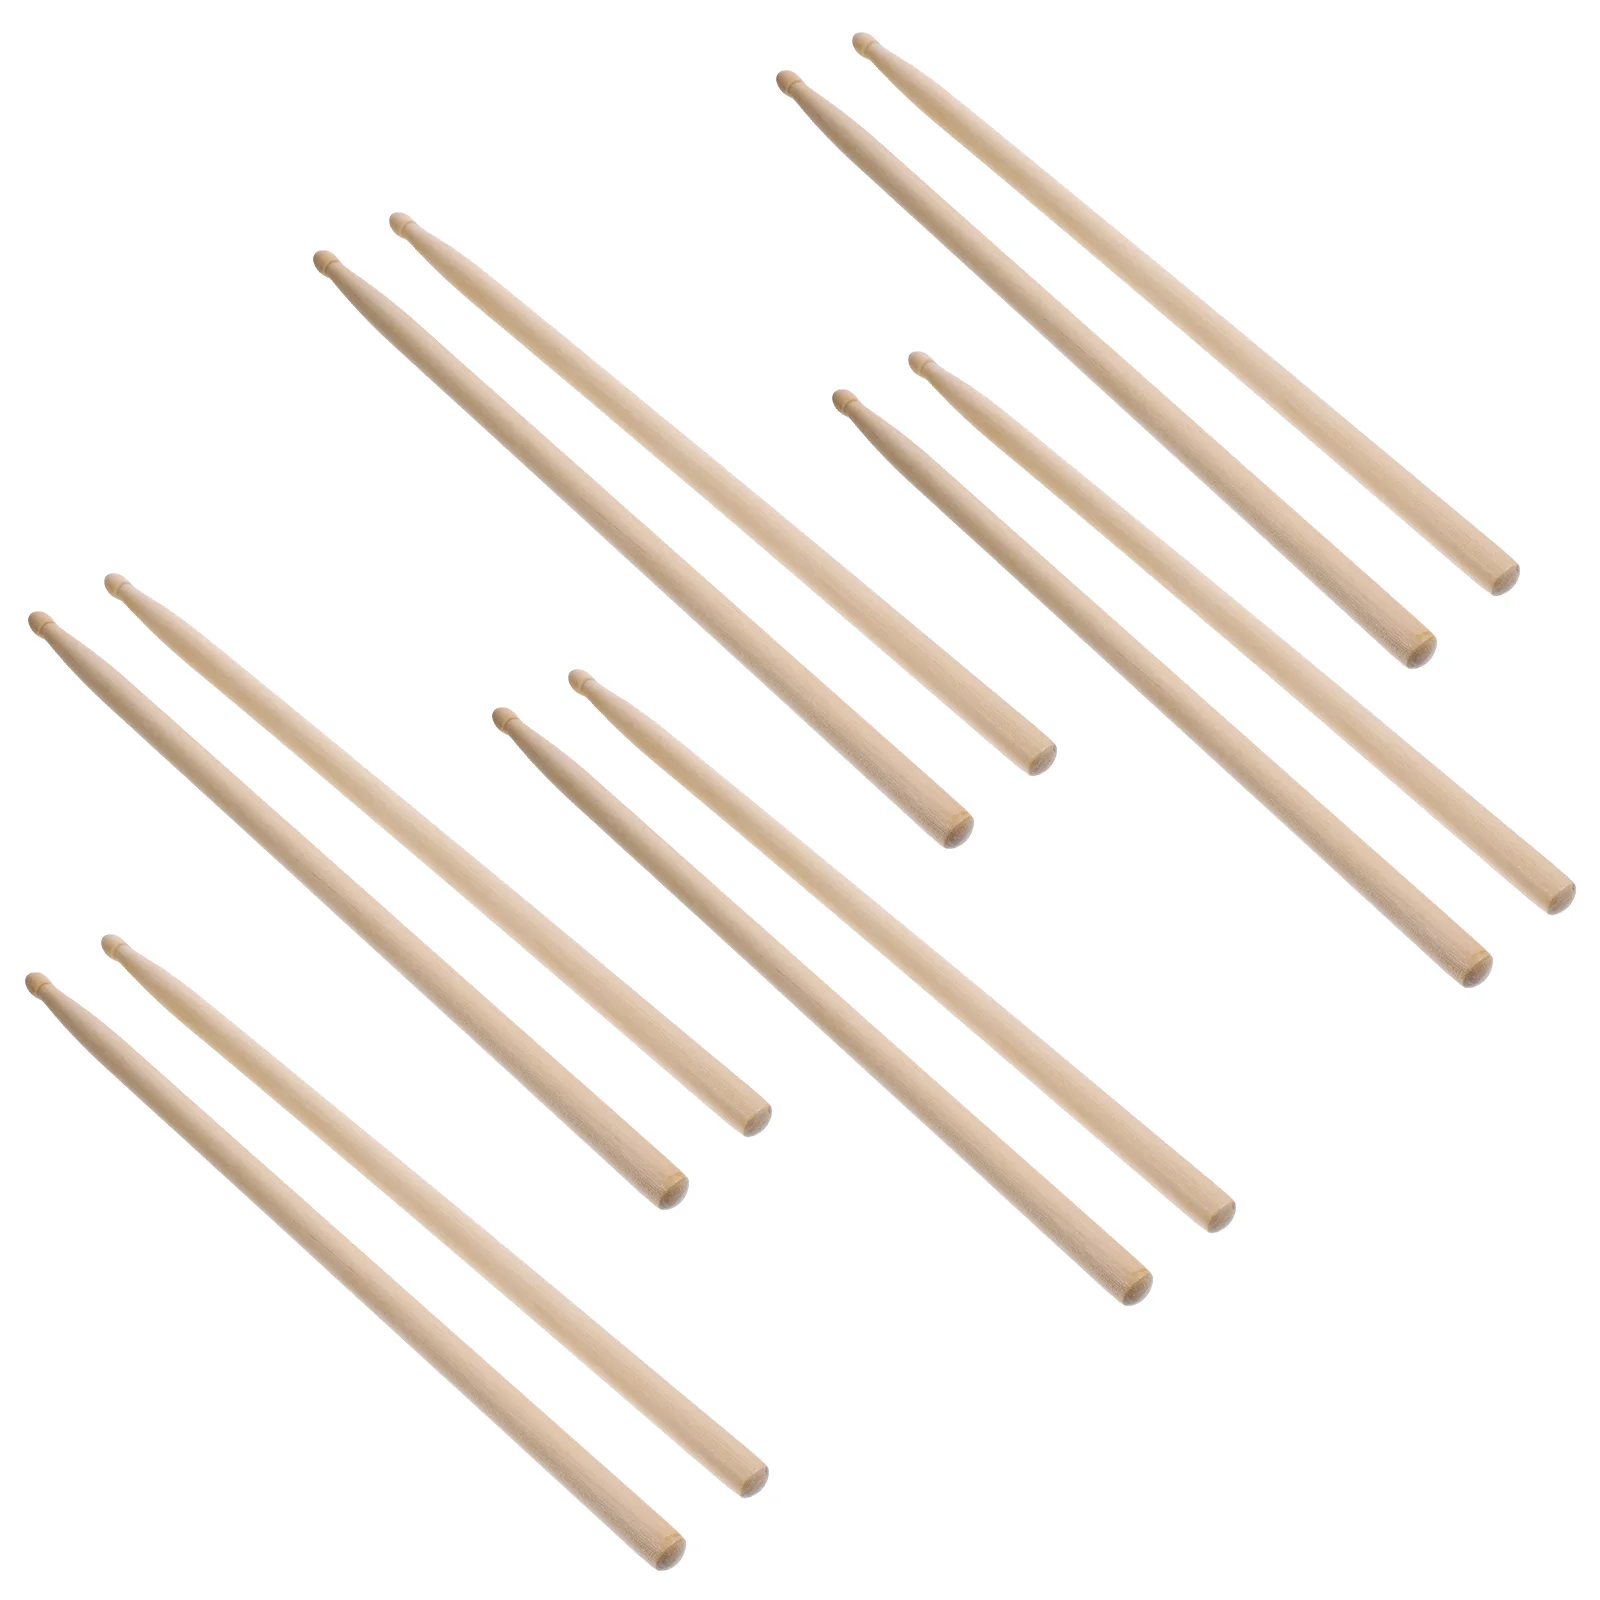 Instrument Mallets 5a Maple Wood Sticks Musical Instruments Drumsticks For Practice instrument mallets 5a maple wood sticks musical instruments drumsticks for practice